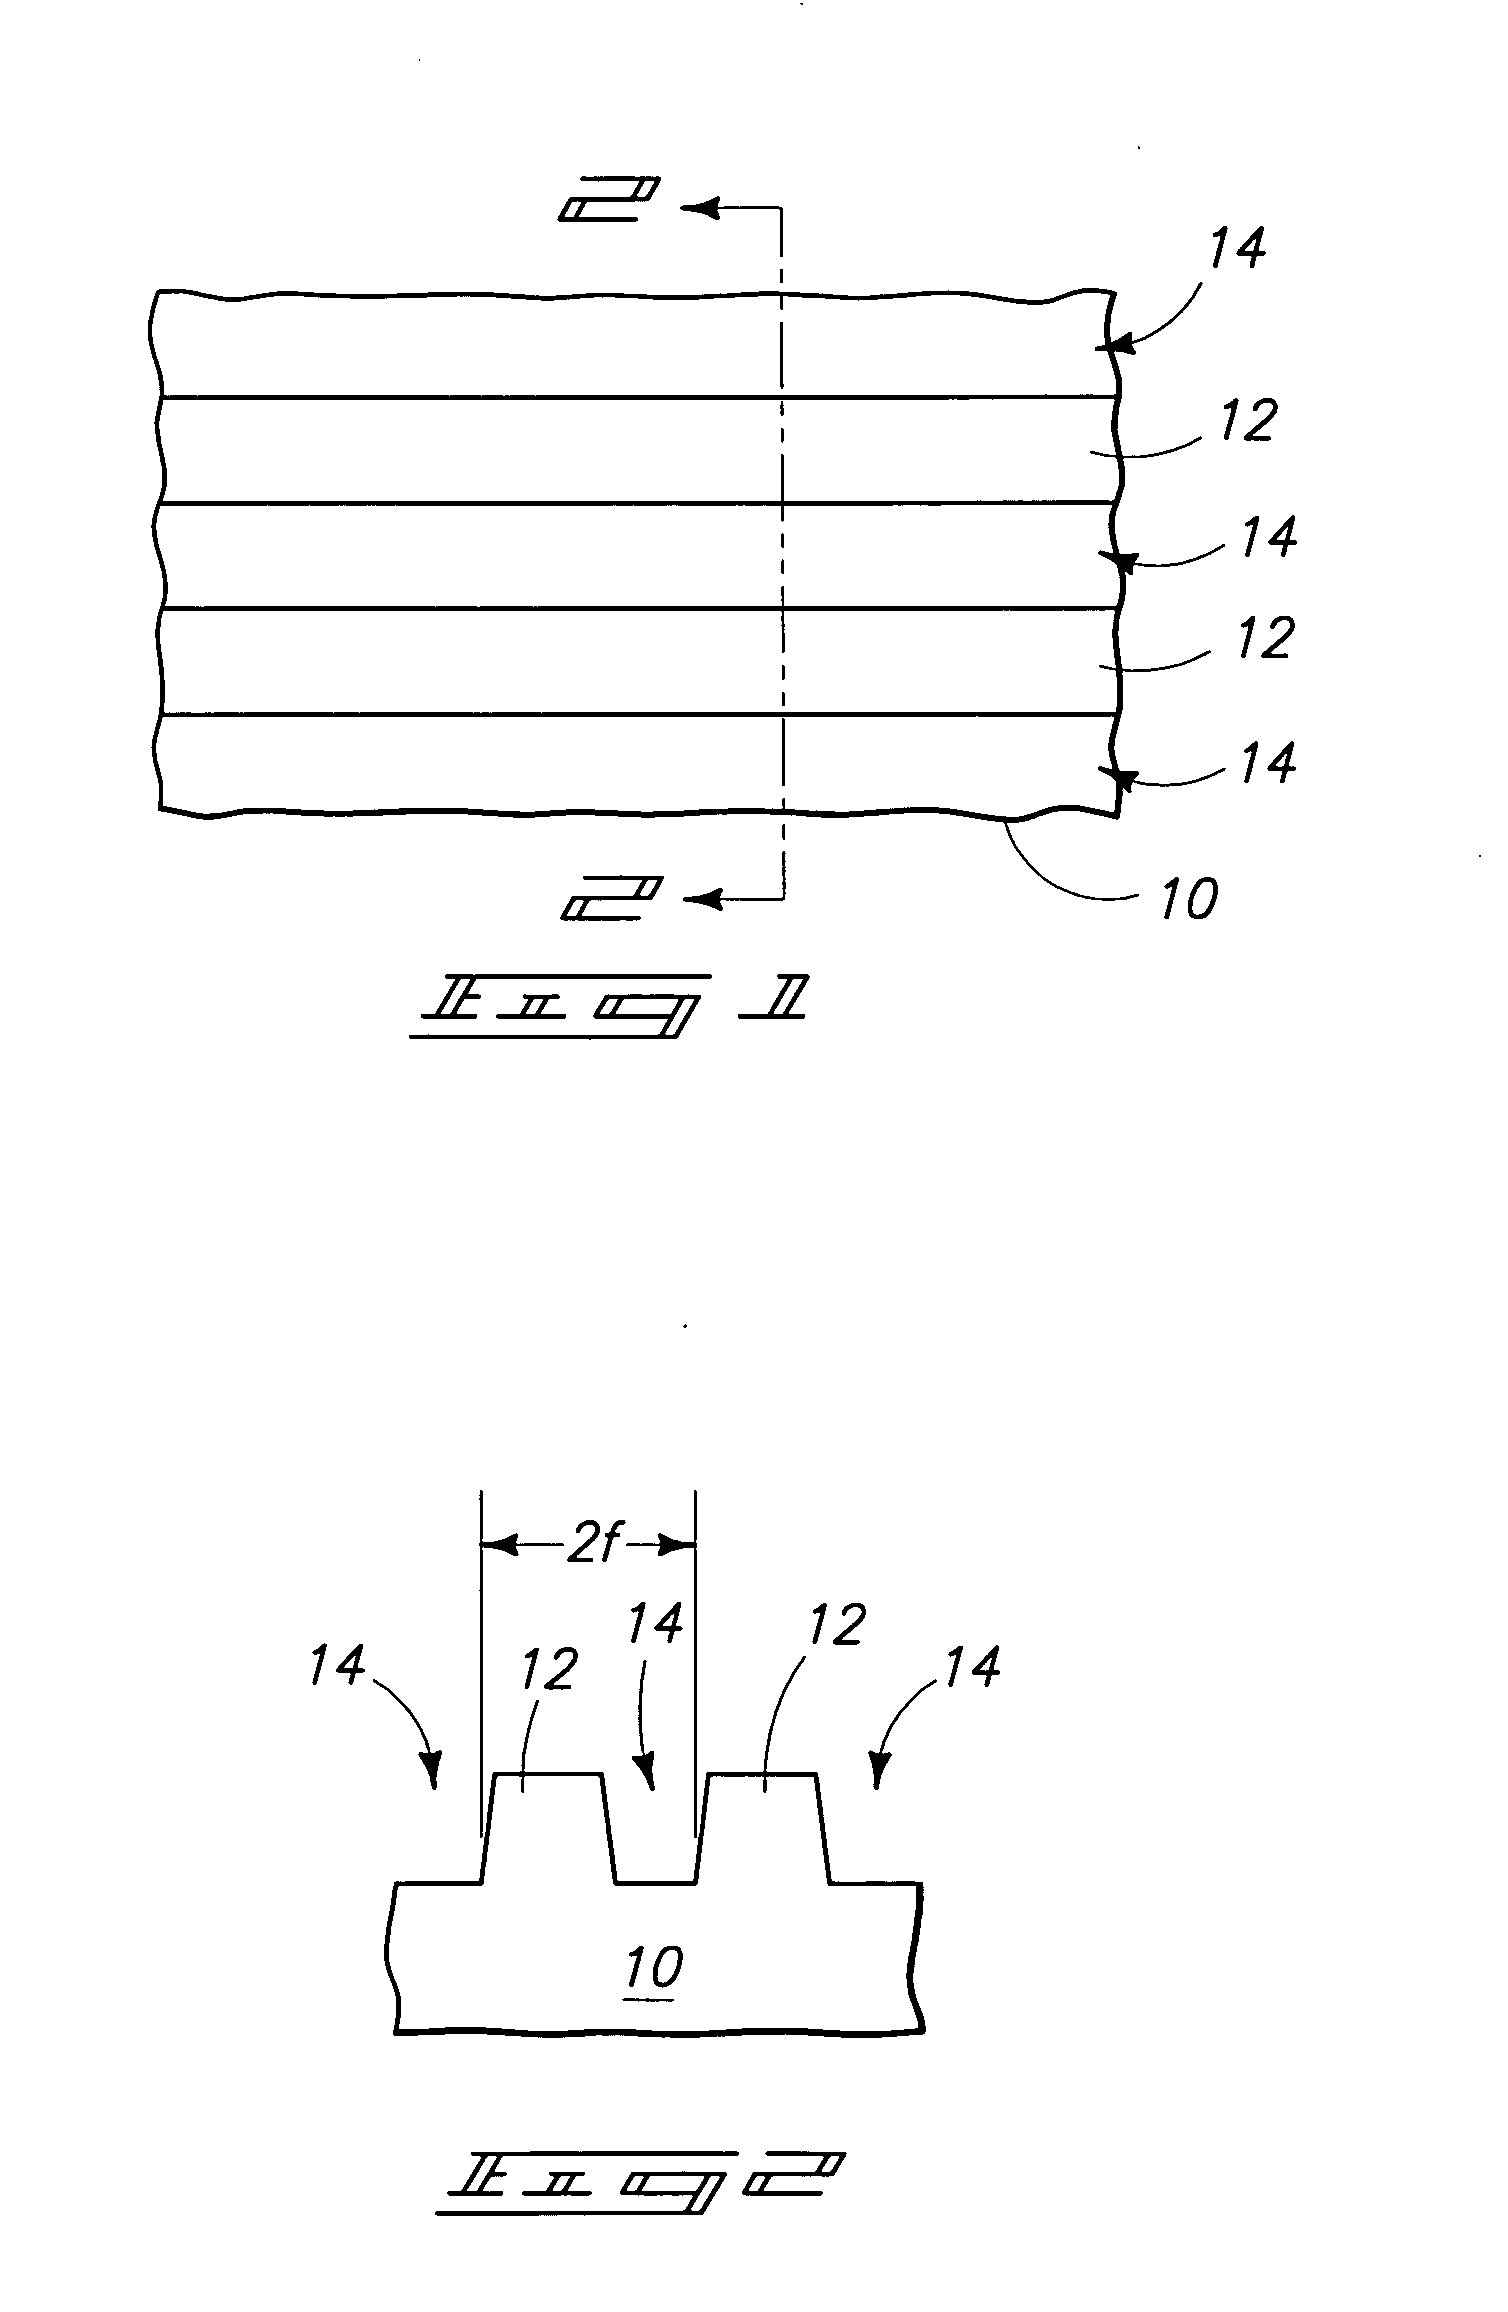 Methods of forming vertical transistors